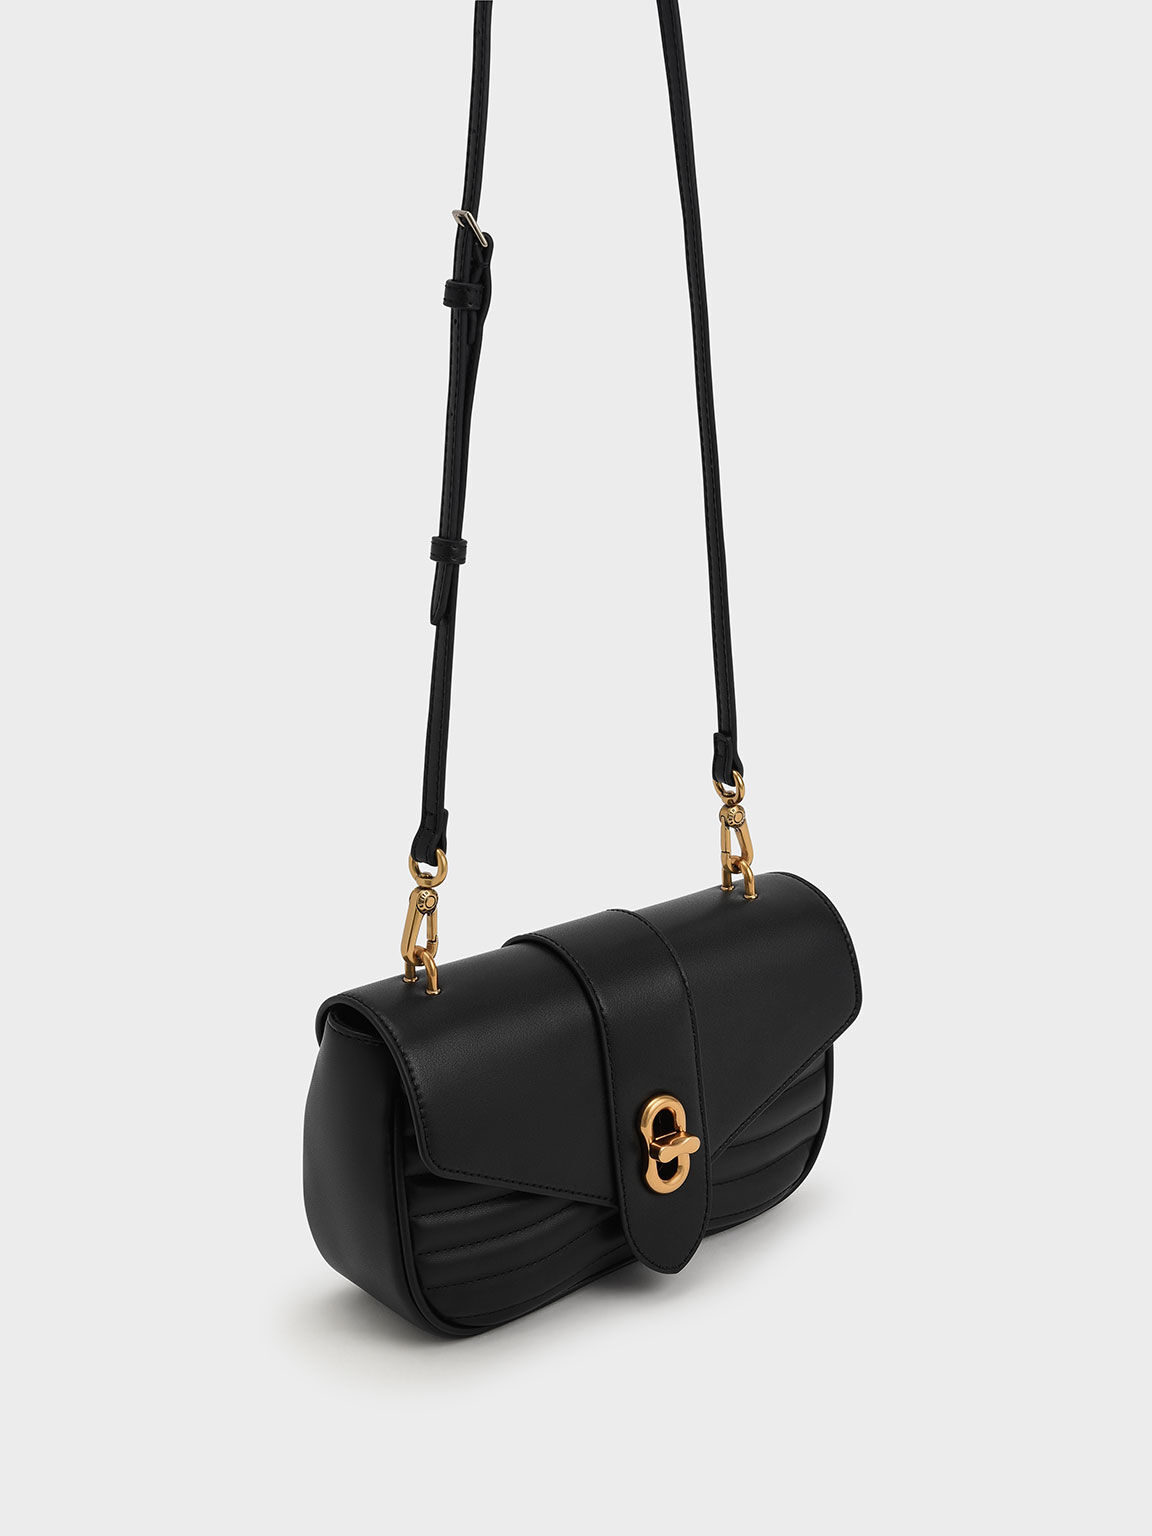 Aubrielle Chain-Handle Panelled Crossbody Bag, Black, hi-res